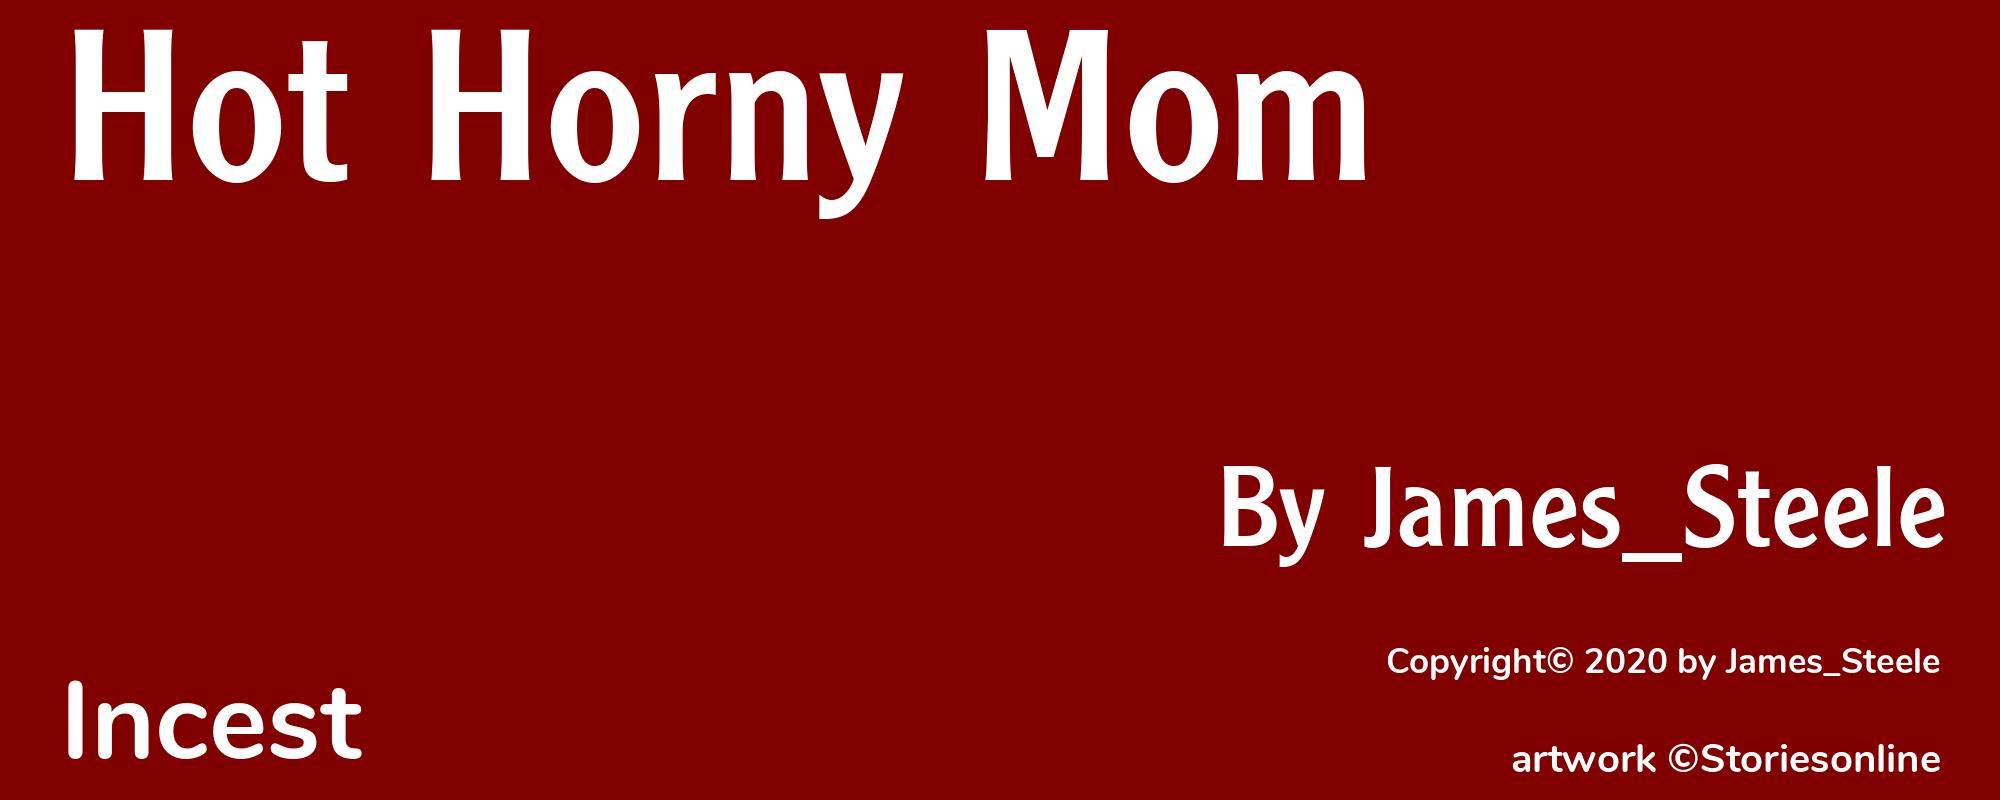 Hot Horny Mom - Cover